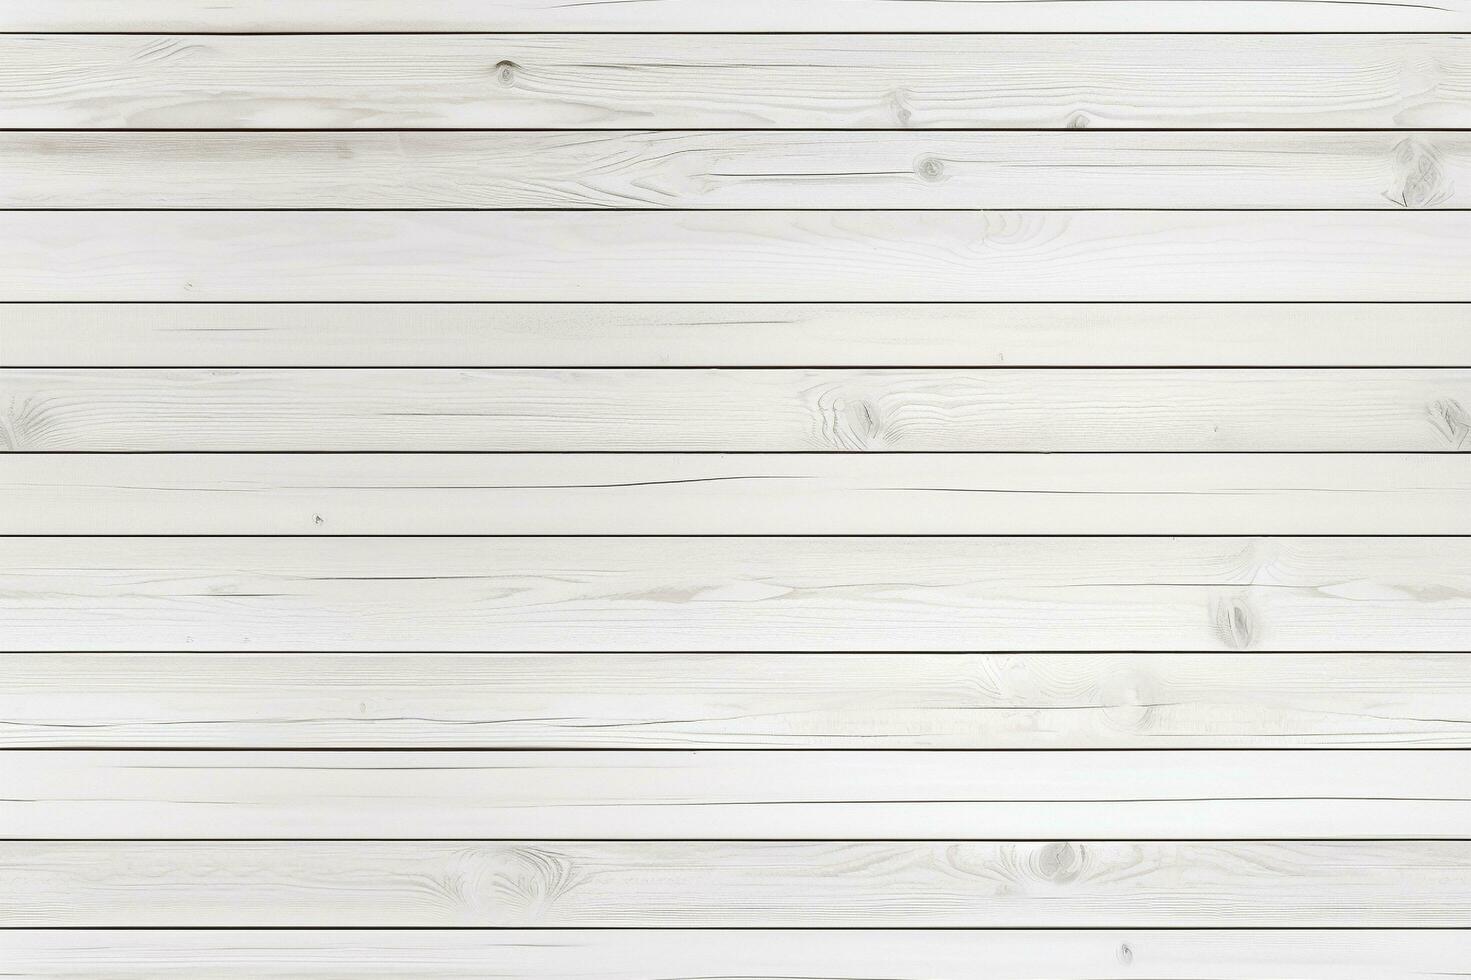 blanco madera antecedentes textura, rústico de madera piso texturizado fondo foto